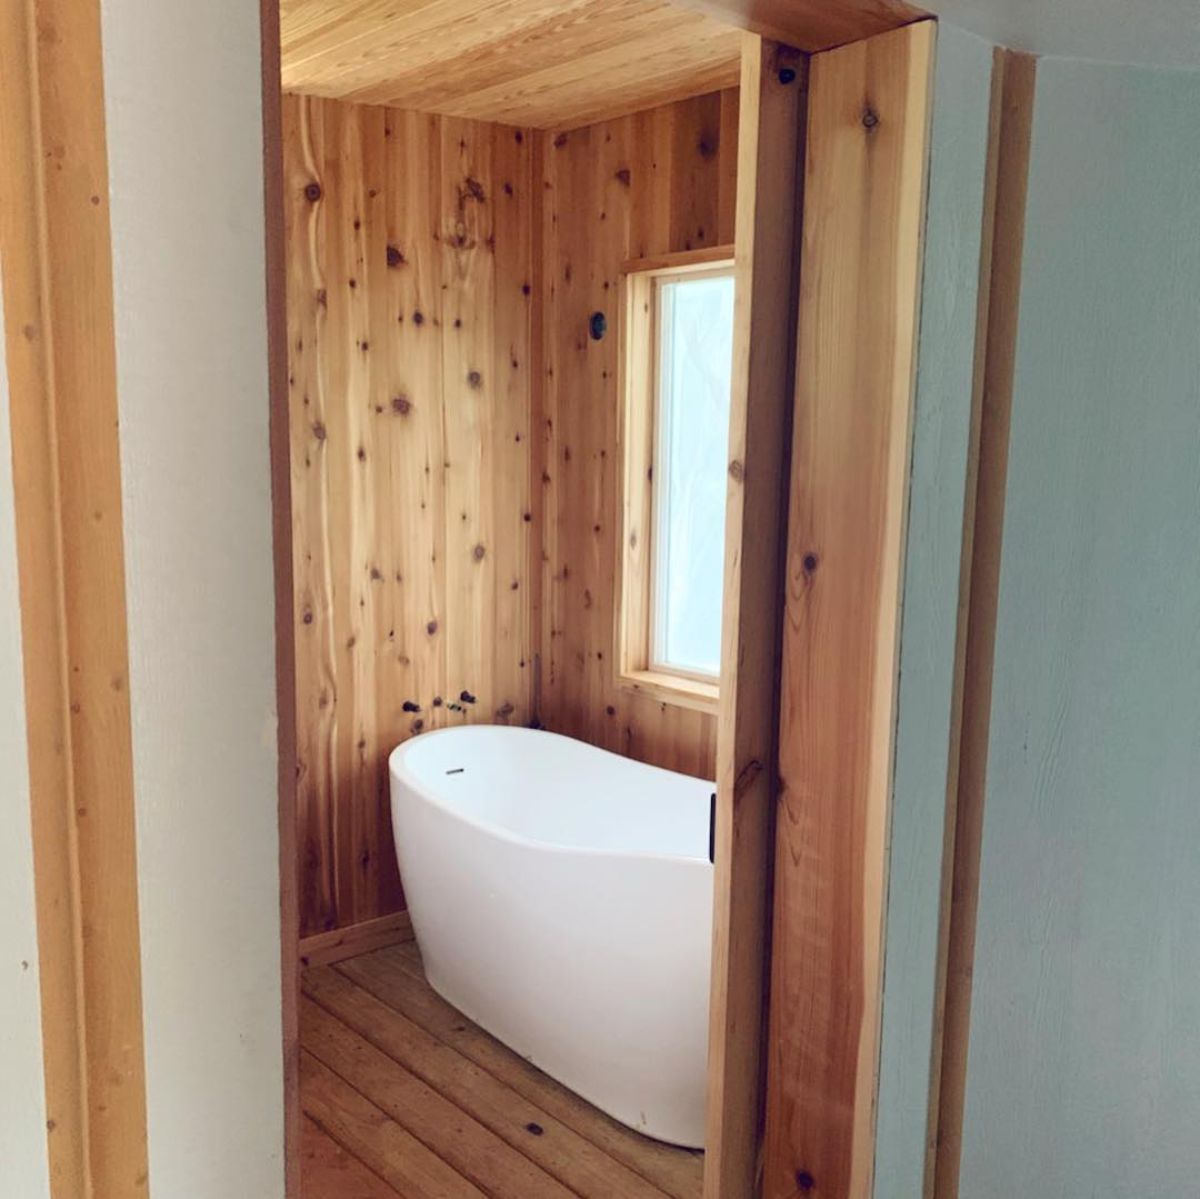 white soaking tub inside bathroom with wood walls